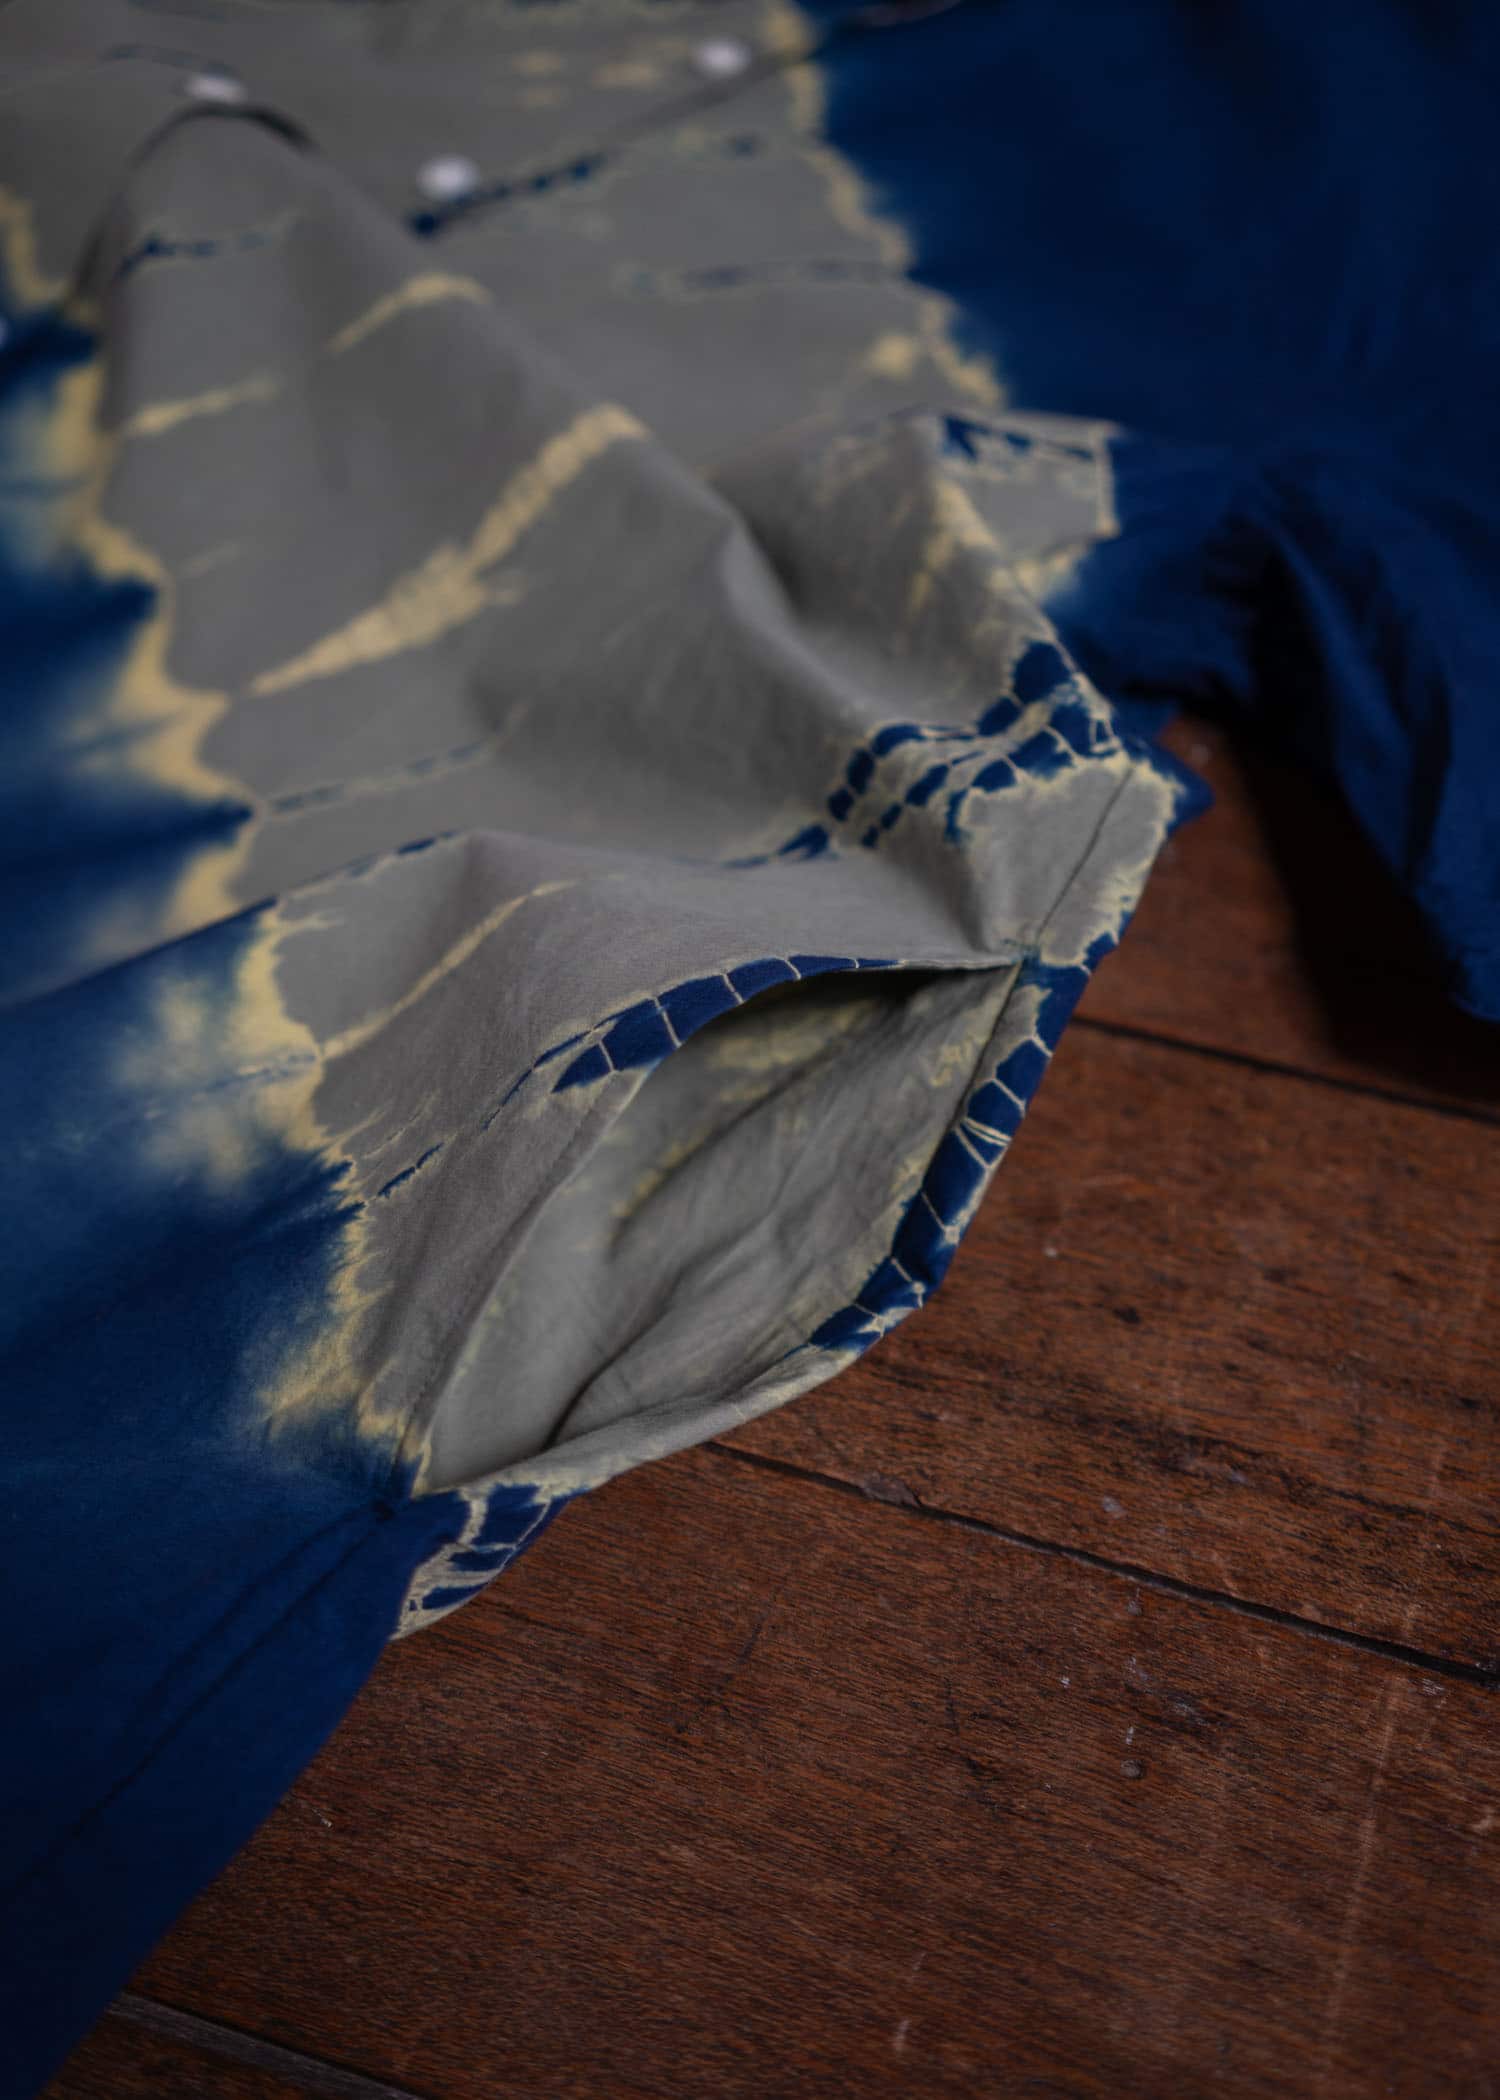 SUZUSAN Cotton Front Button Half Sleeve Dress Tesuji Yoroidan Shibori Diagonal Navy Blue x Khaki